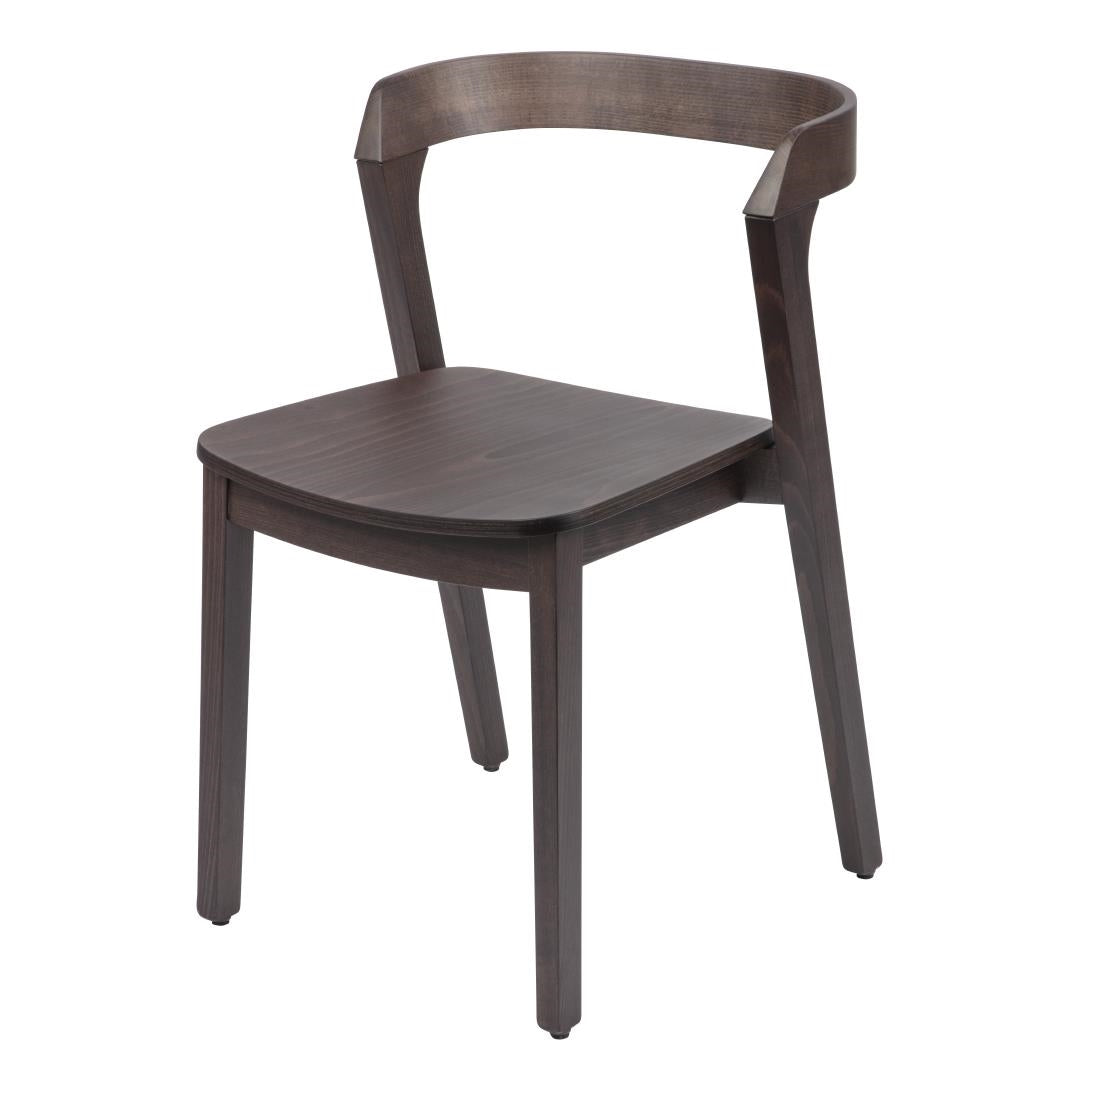 Bespoke Arco Side Chair Beech FX080 JD Catering Equipment Solutions Ltd